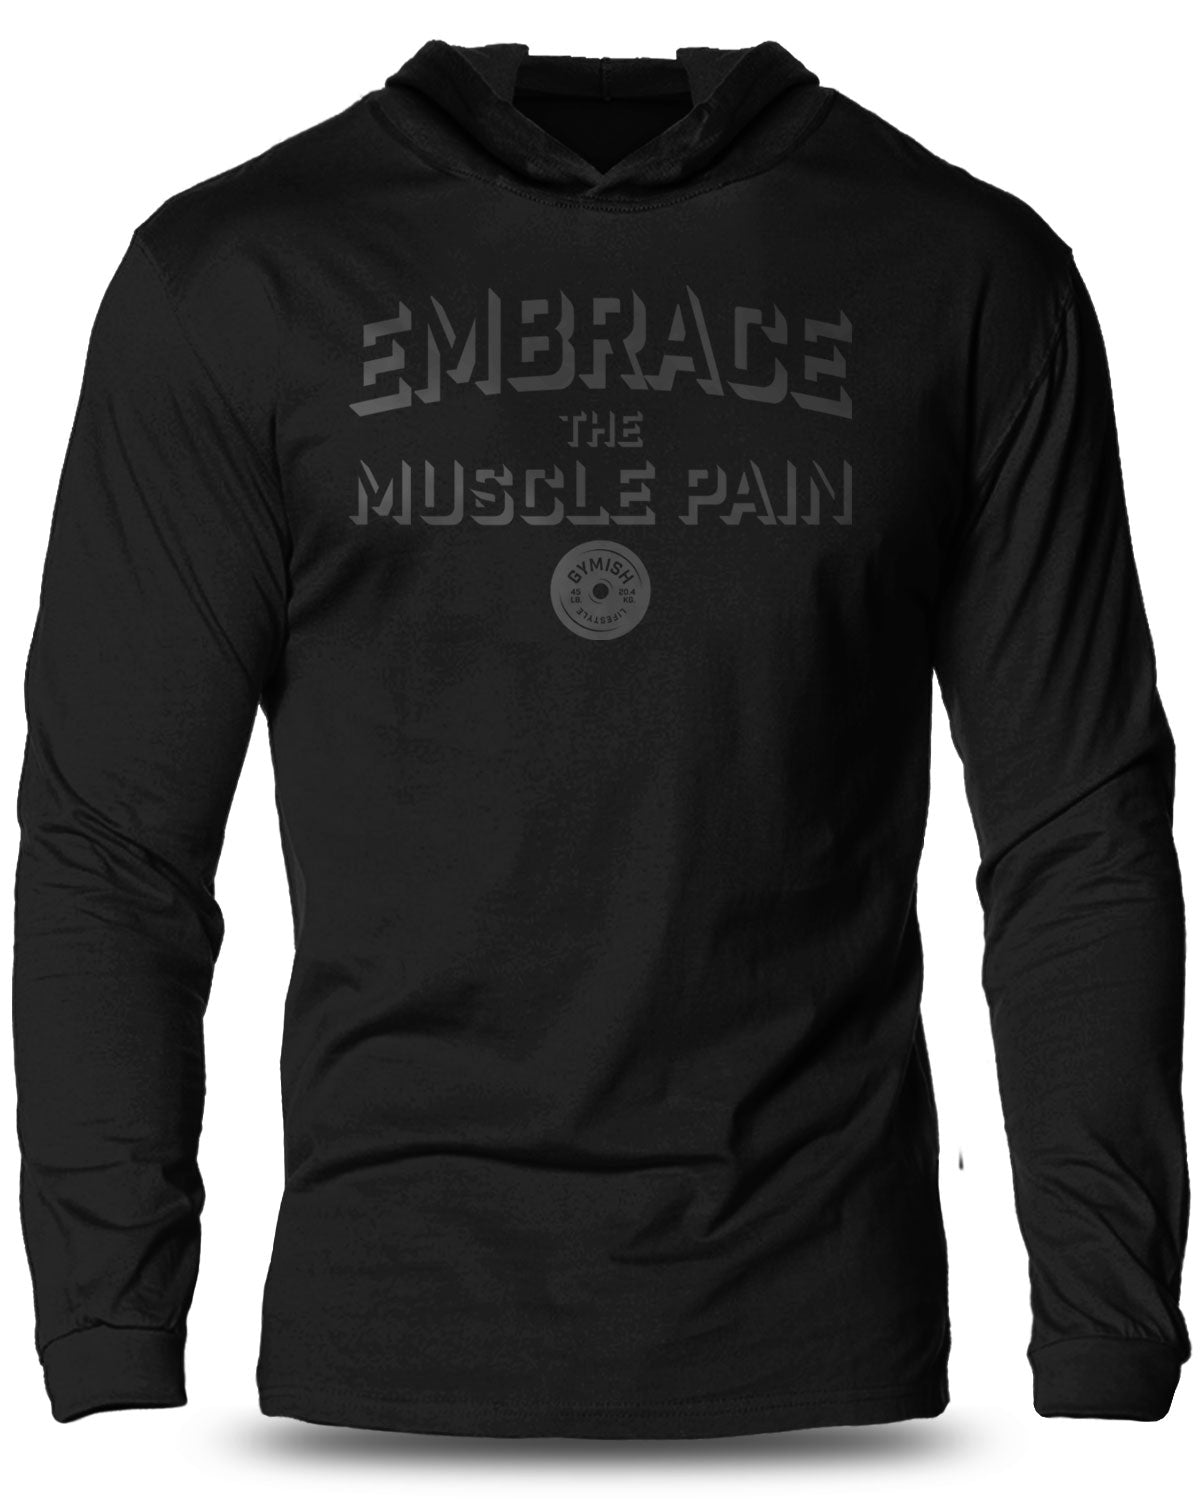 048- Embrace Muscle Pain Lightweight Long Sleeve Hooded T-shirt for Men